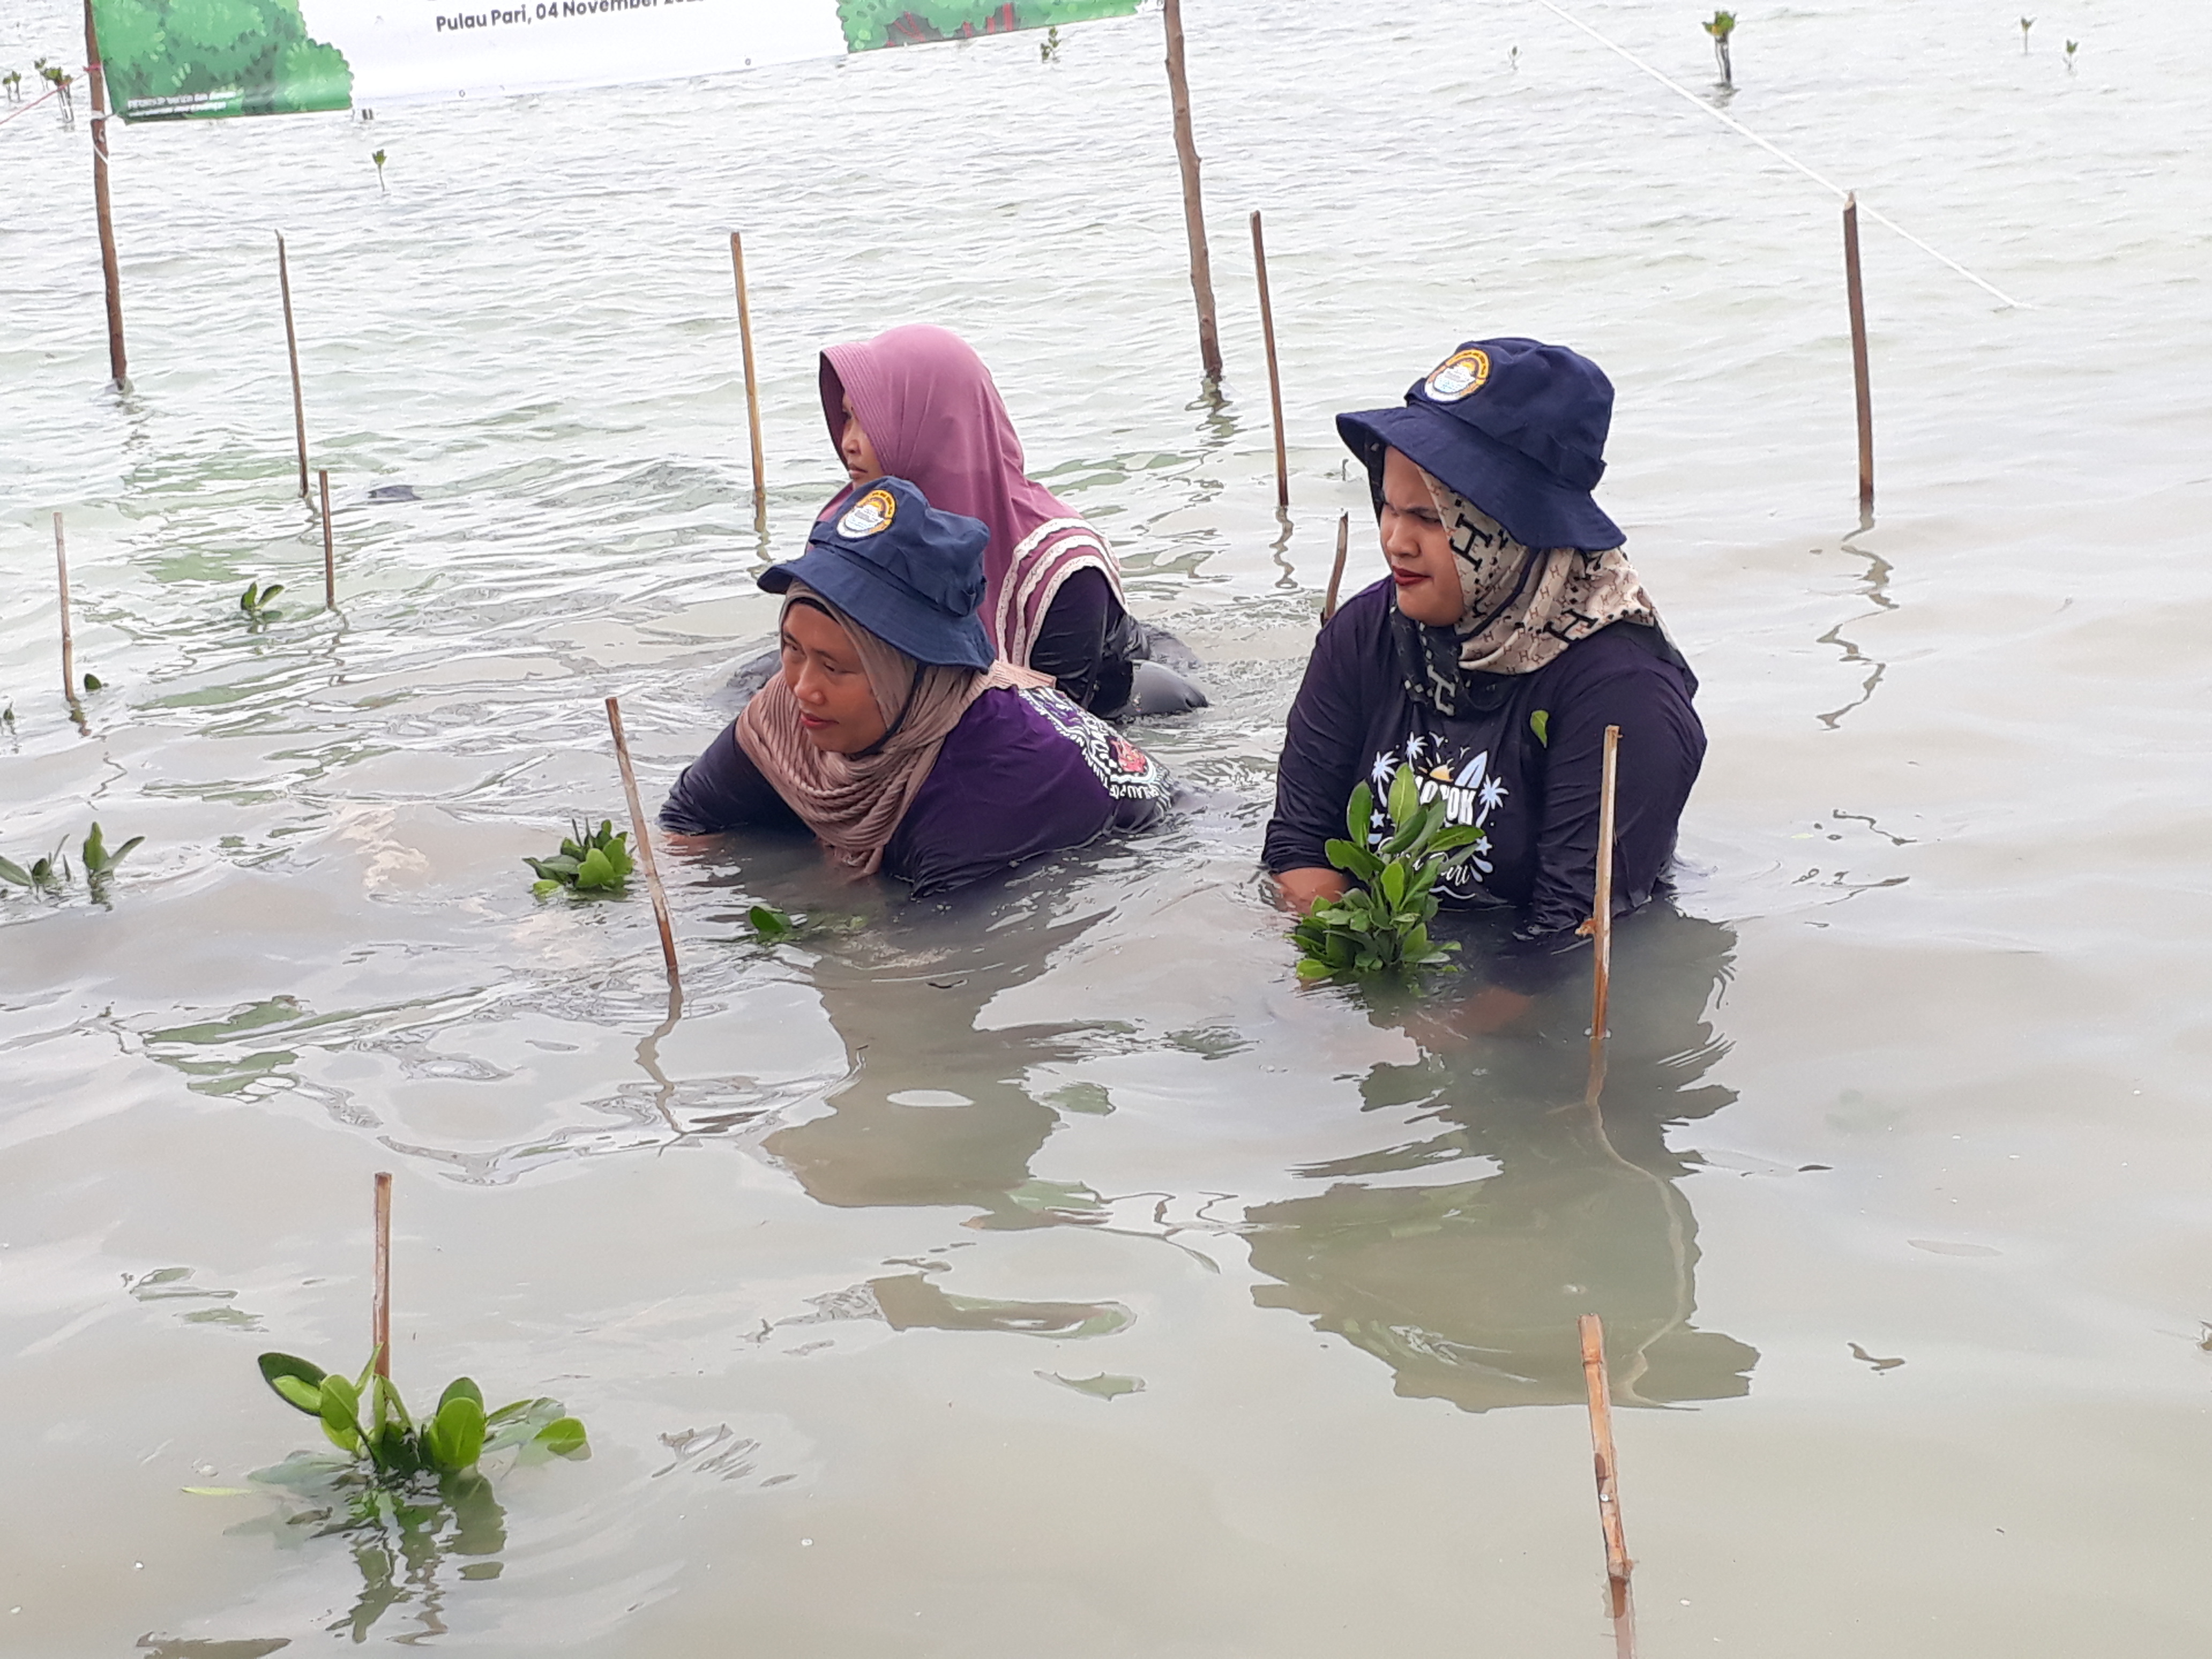 Foto penanaman mangrove Hijrahfest bersama Kelompok Forum Peduli Pulau Pari. (Dokumentasi: LindungiHutan)